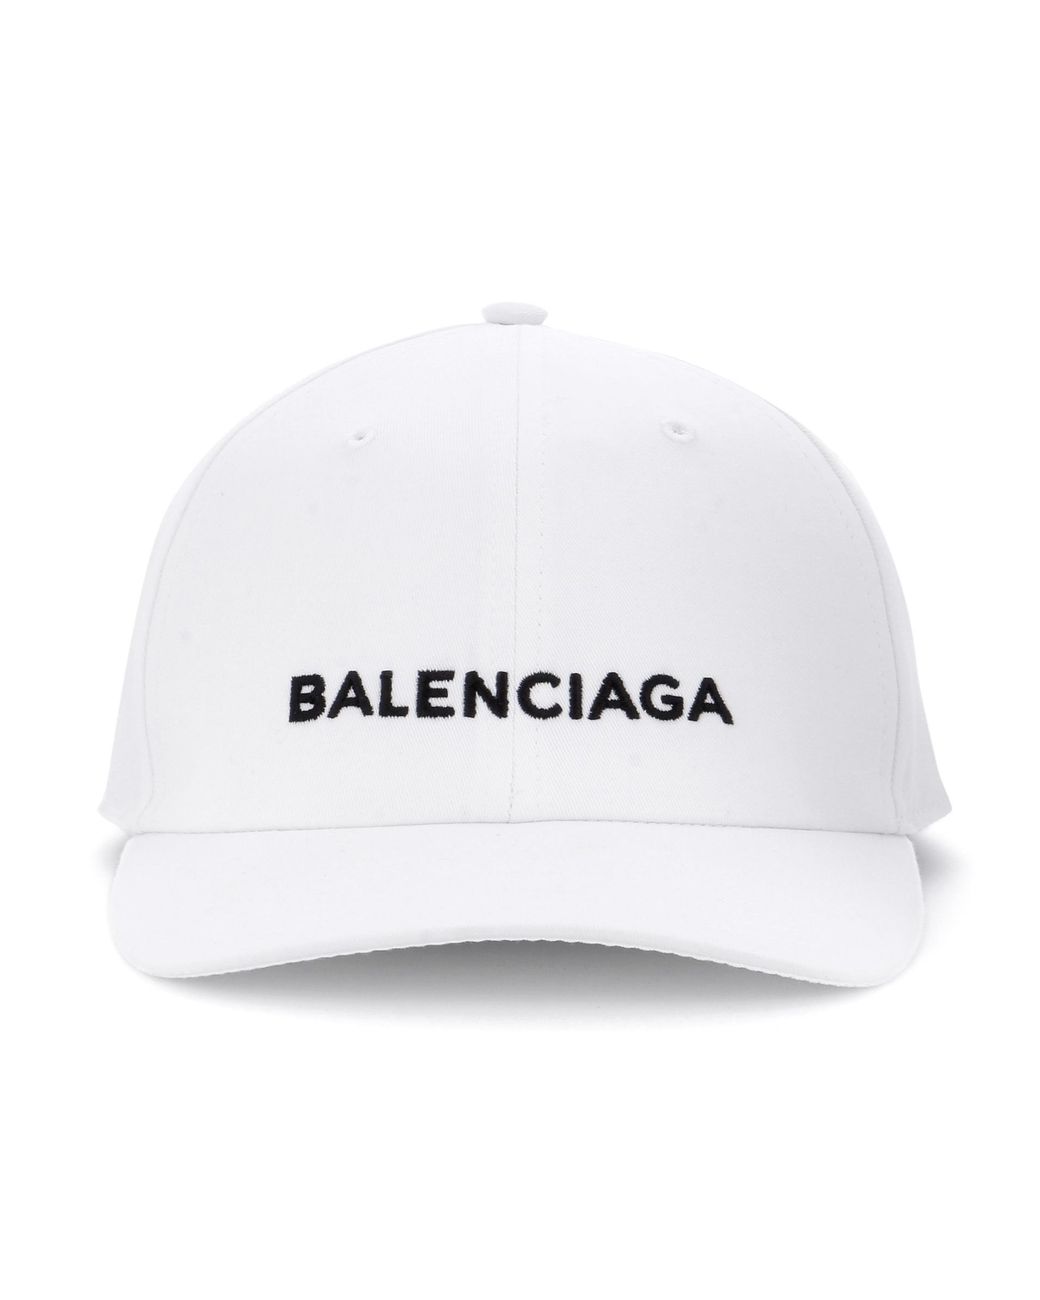 Balenciaga Baseball Cap in White | Lyst